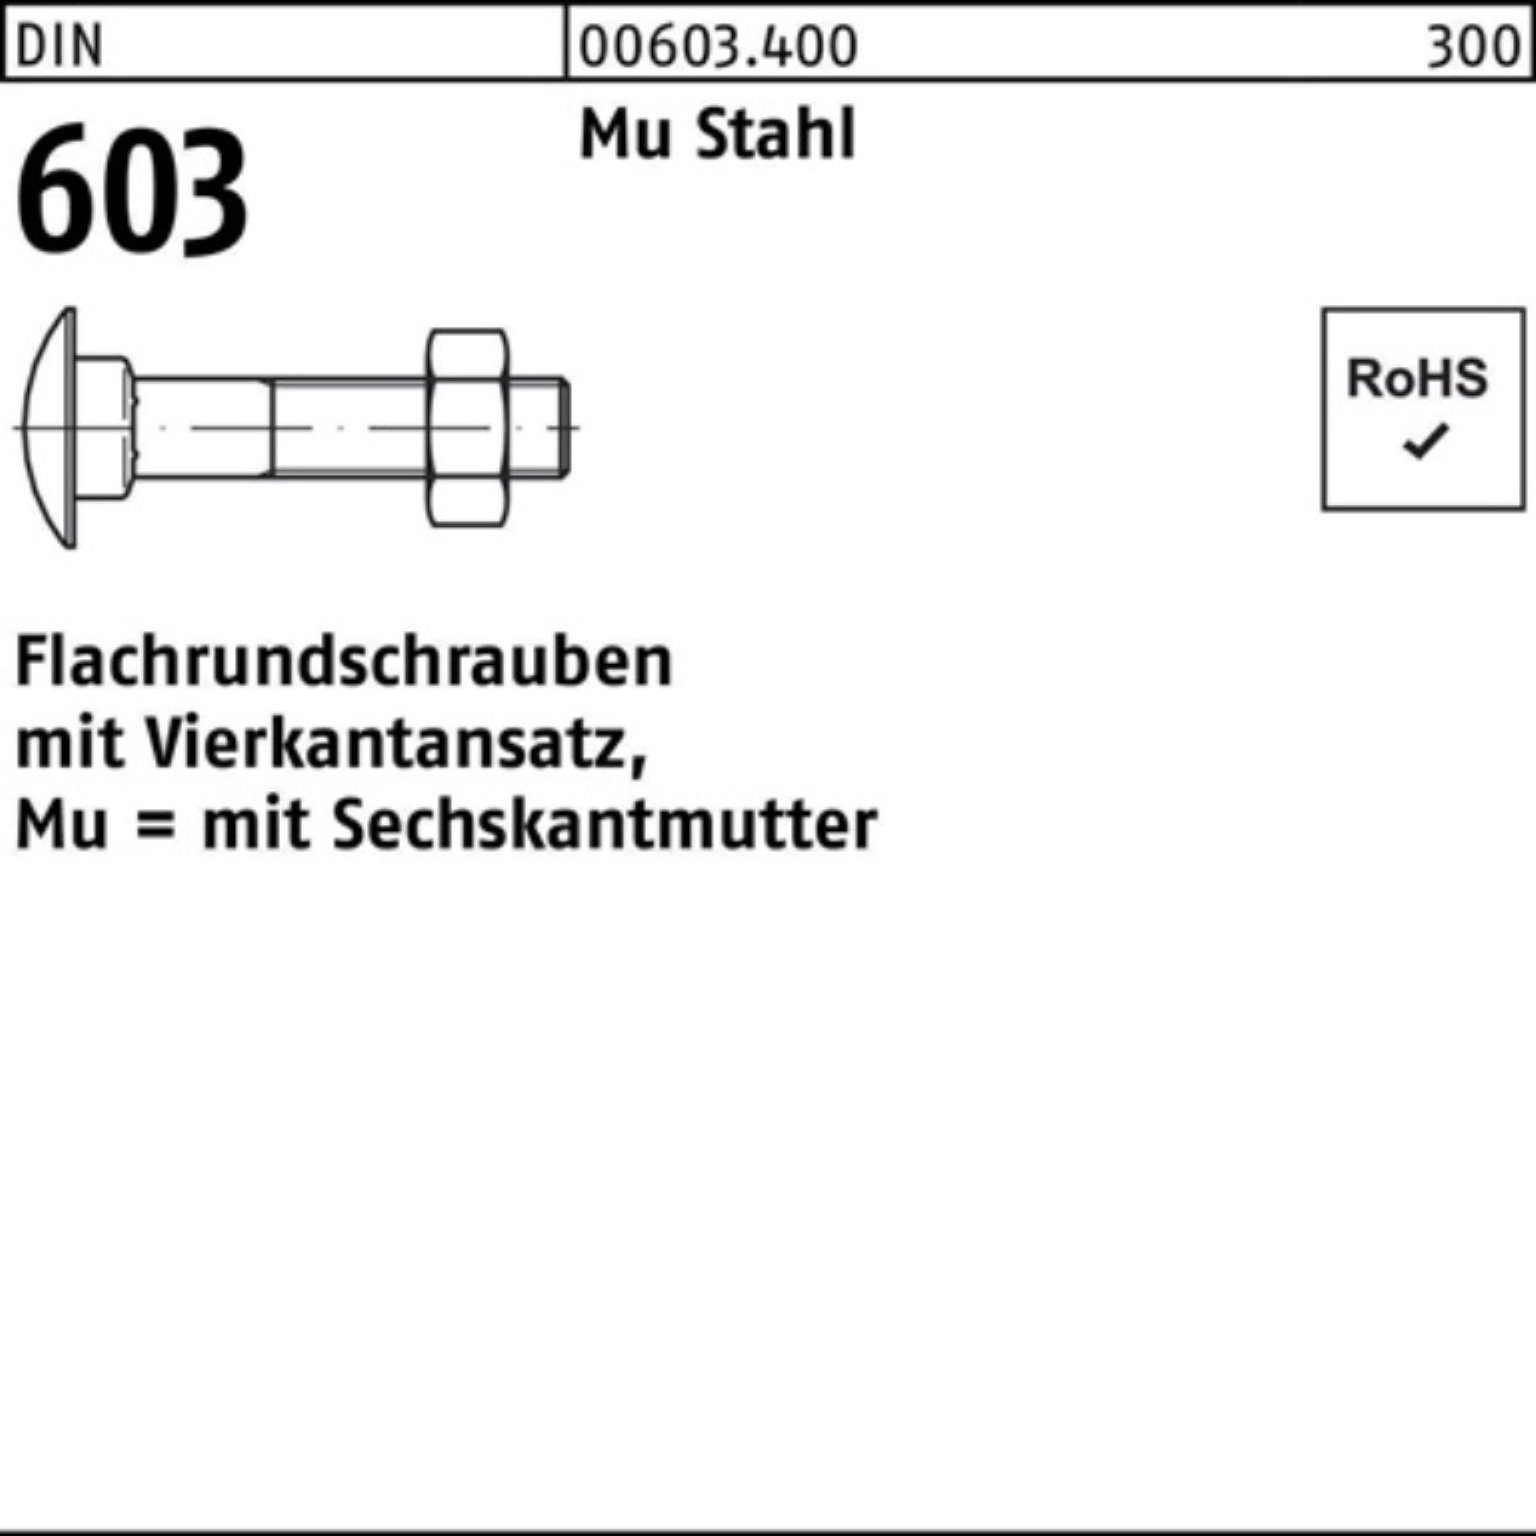 603 DIN Flachrundschraube Reyher 100er Vierkantansatz/6-ktmutter Pack M12x320 Schraube